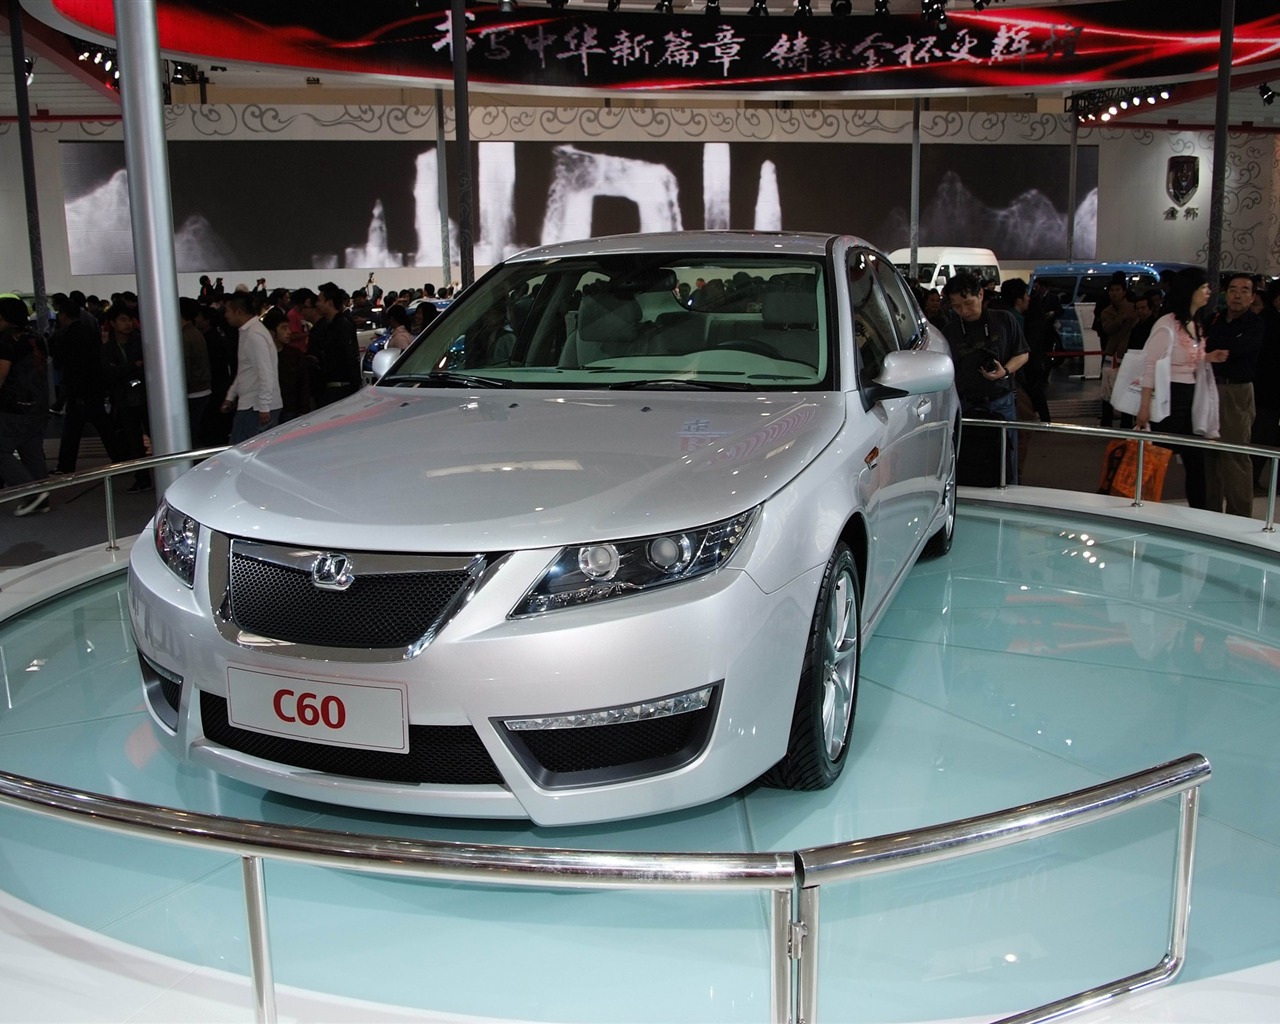 2010 Beijing International Auto Show Heung Che (rebar works) #9 - 1280x1024